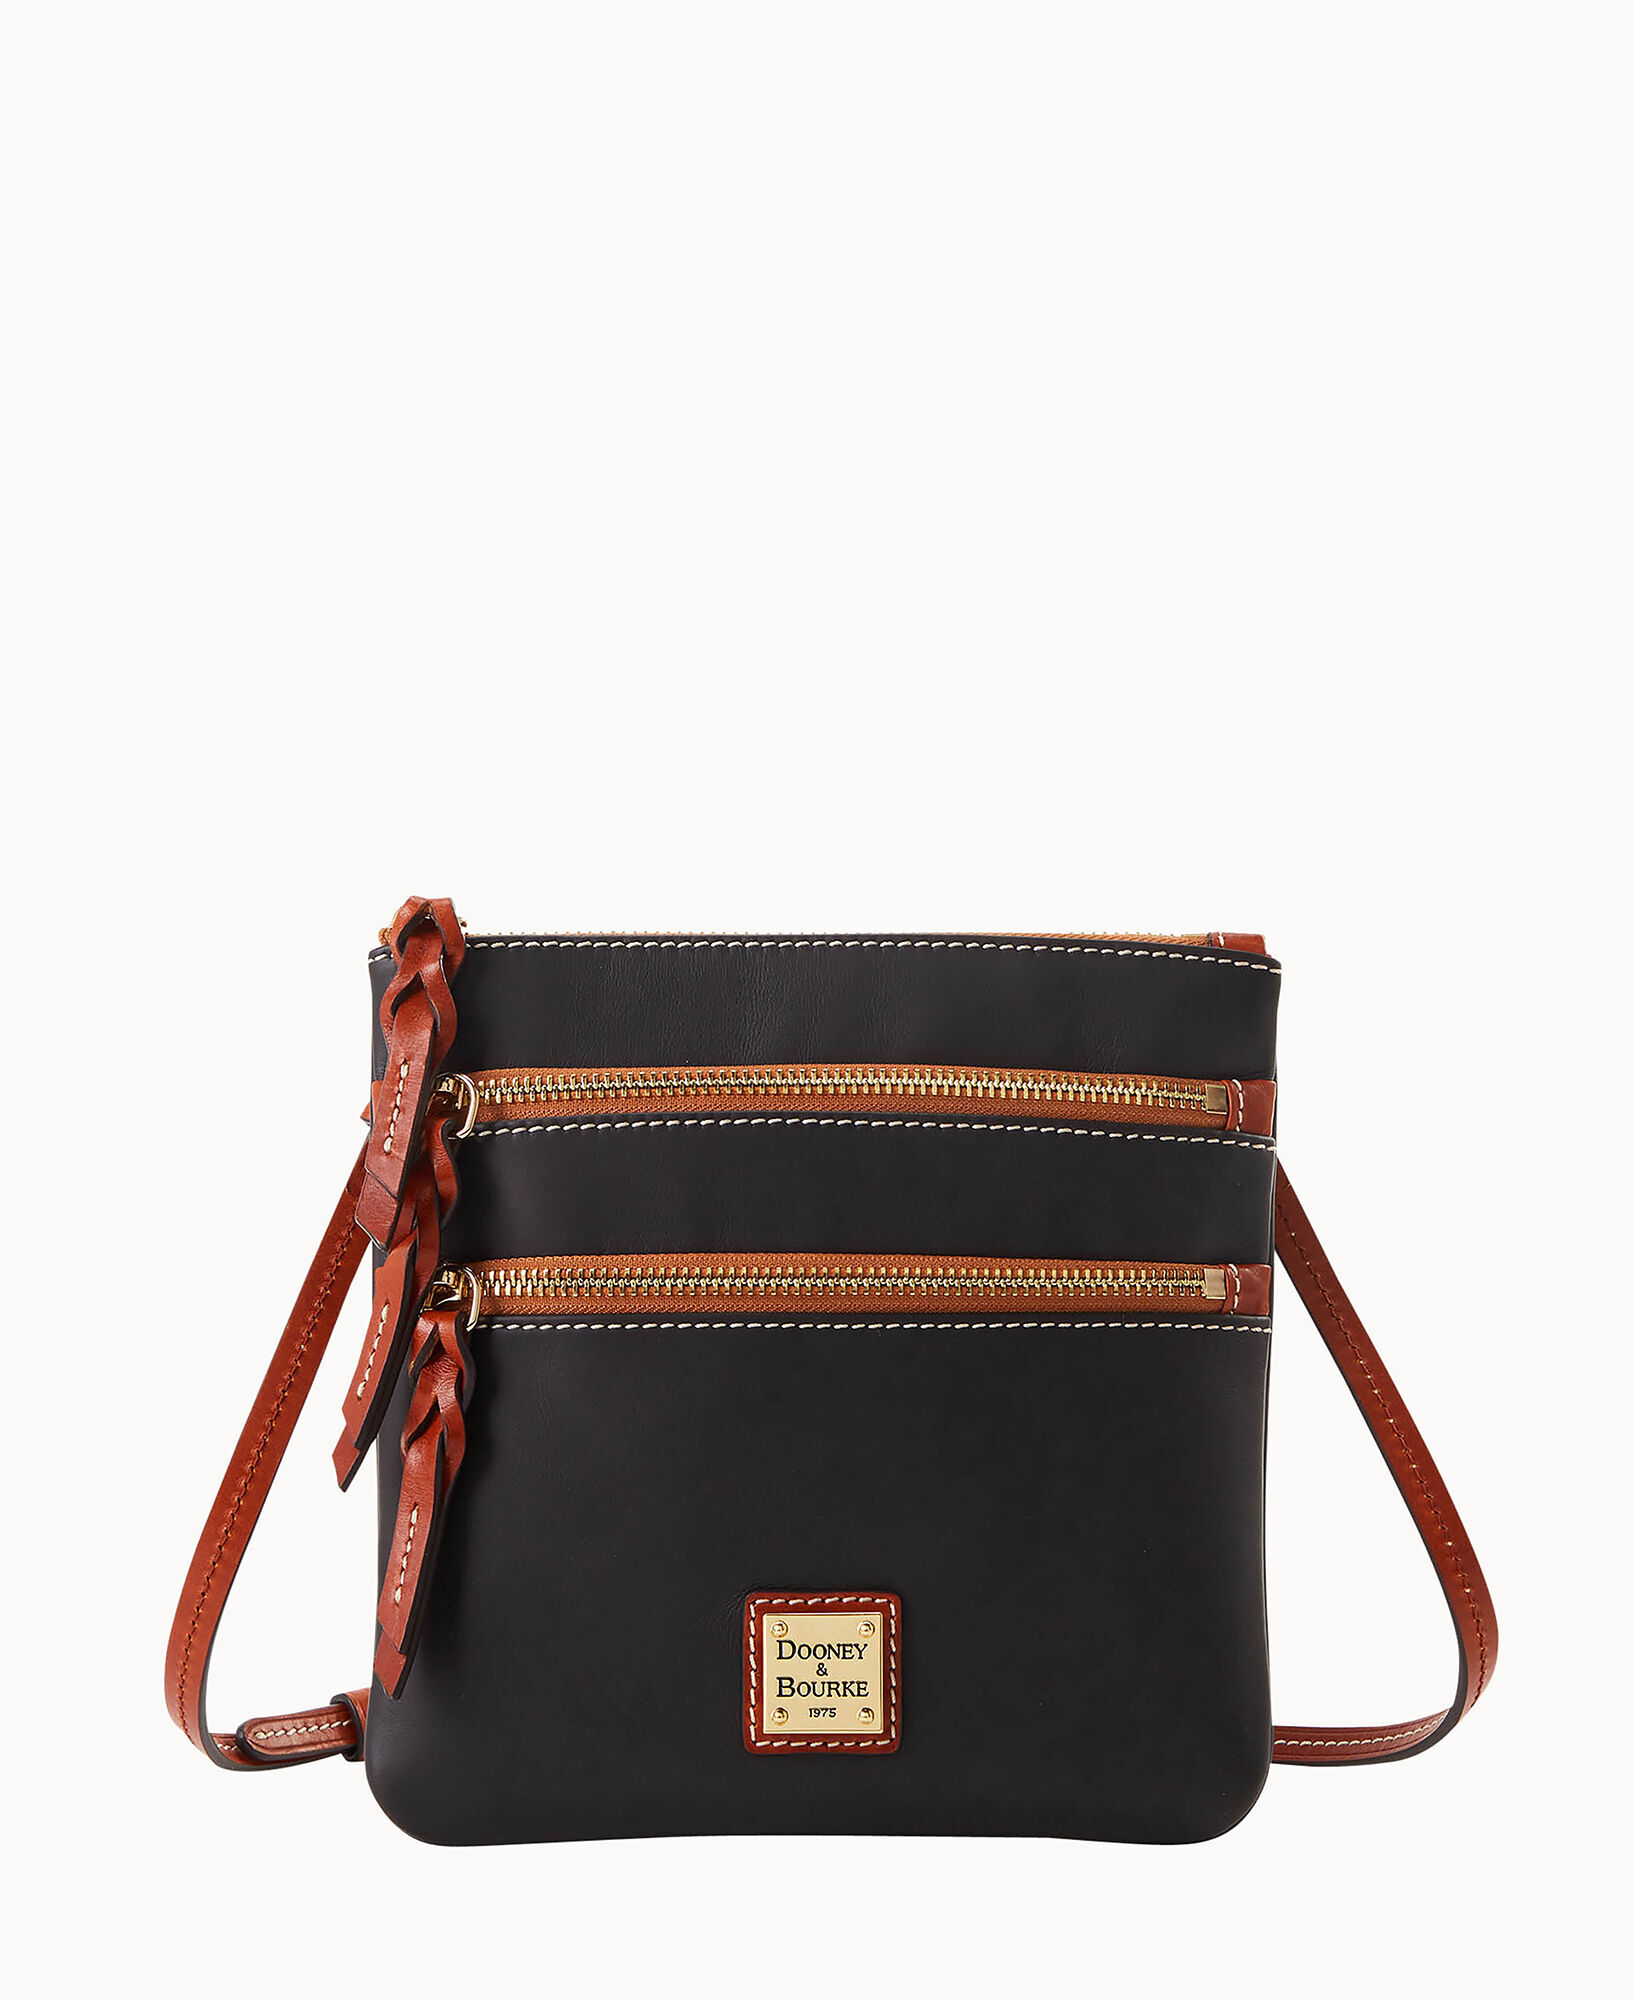 Dooney & Bourke Florentine Leather Triple Zip Crossbody Bag Purse Black